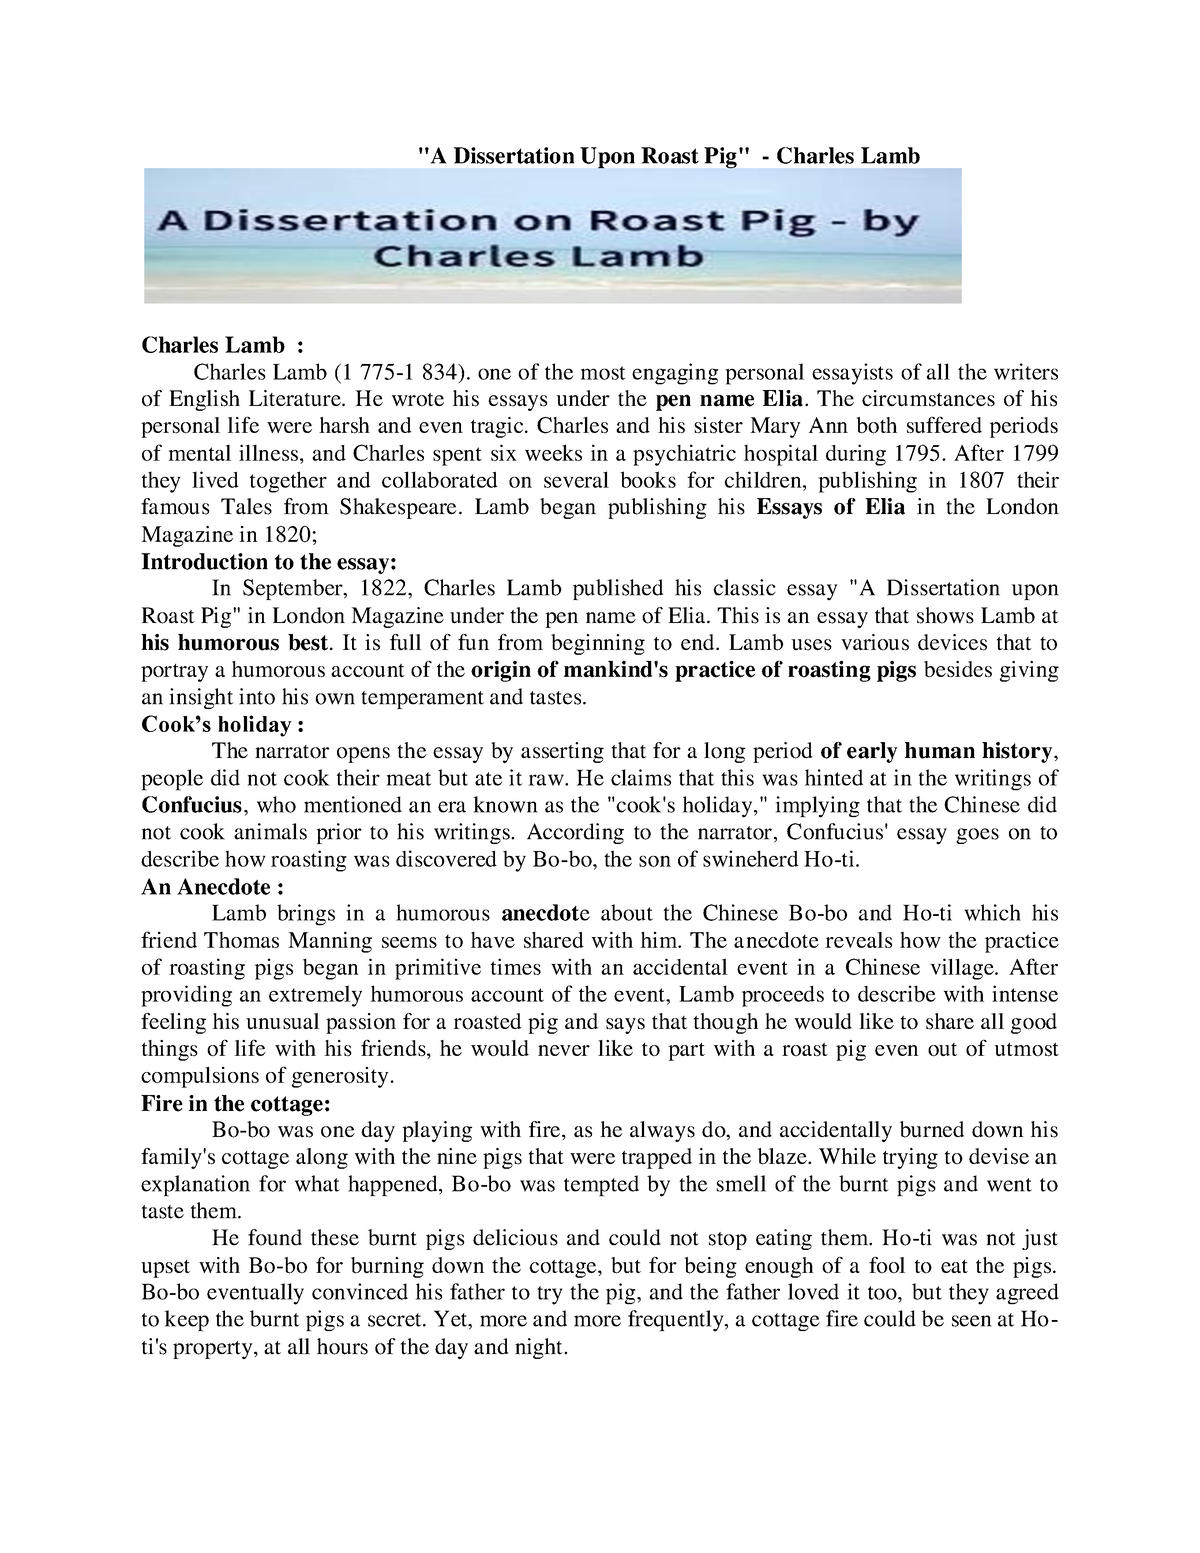 dissertation on roast pig wiki